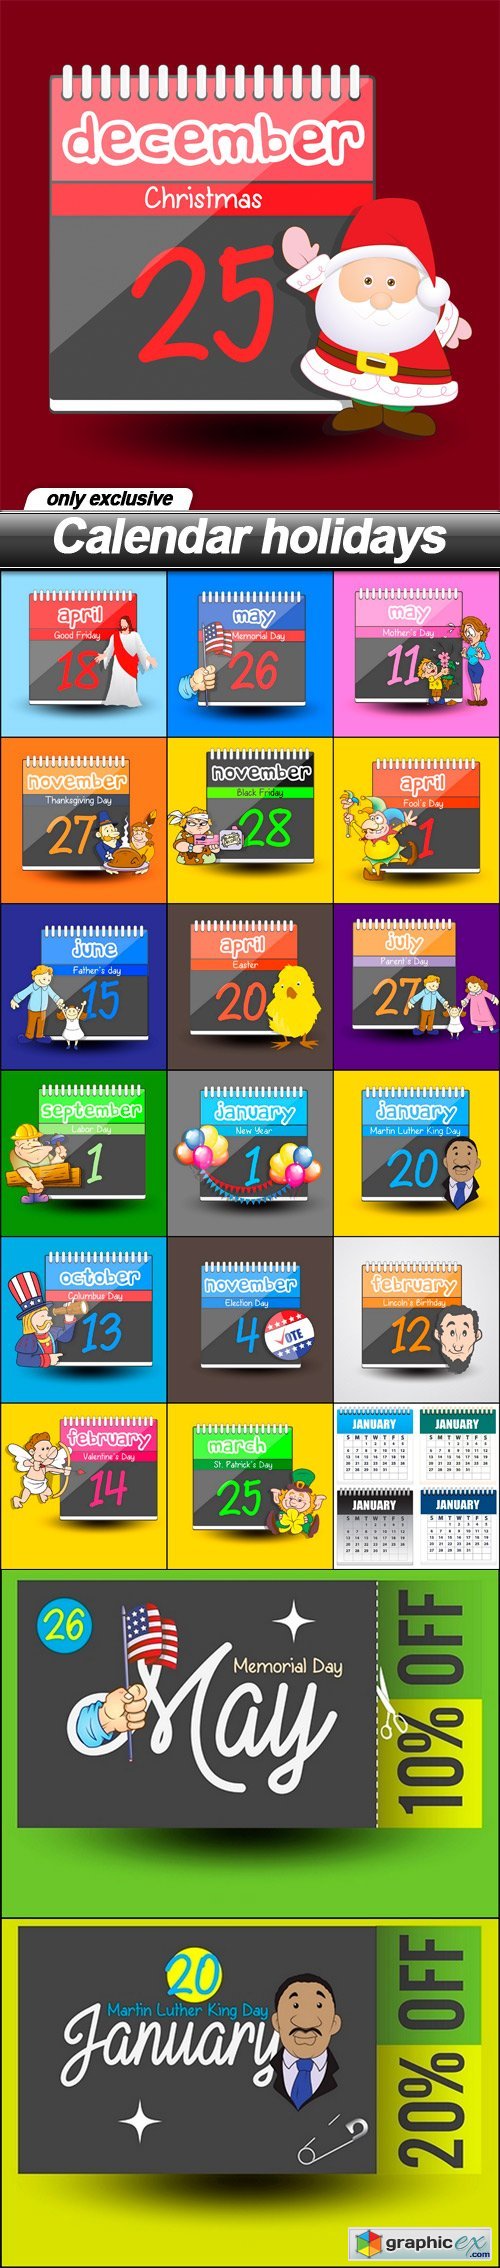 Calendar holidays - 21 EPS